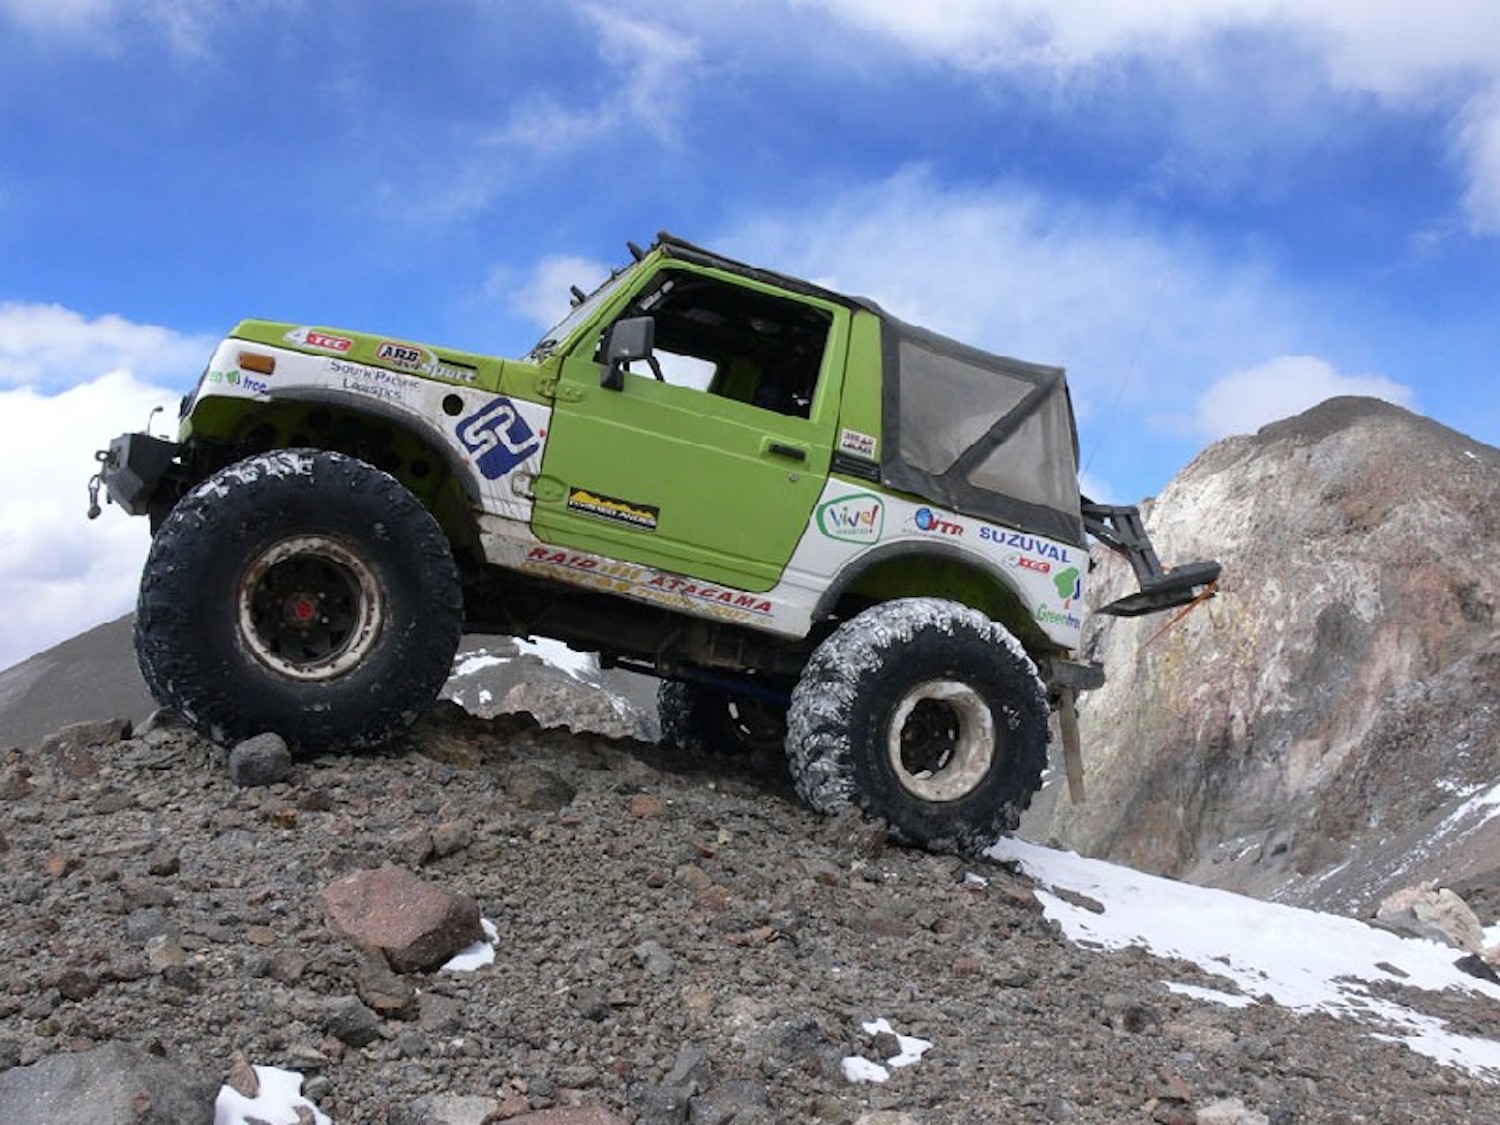 Green 1986 Suzuki Samurai parked atop a mountain in Chile.